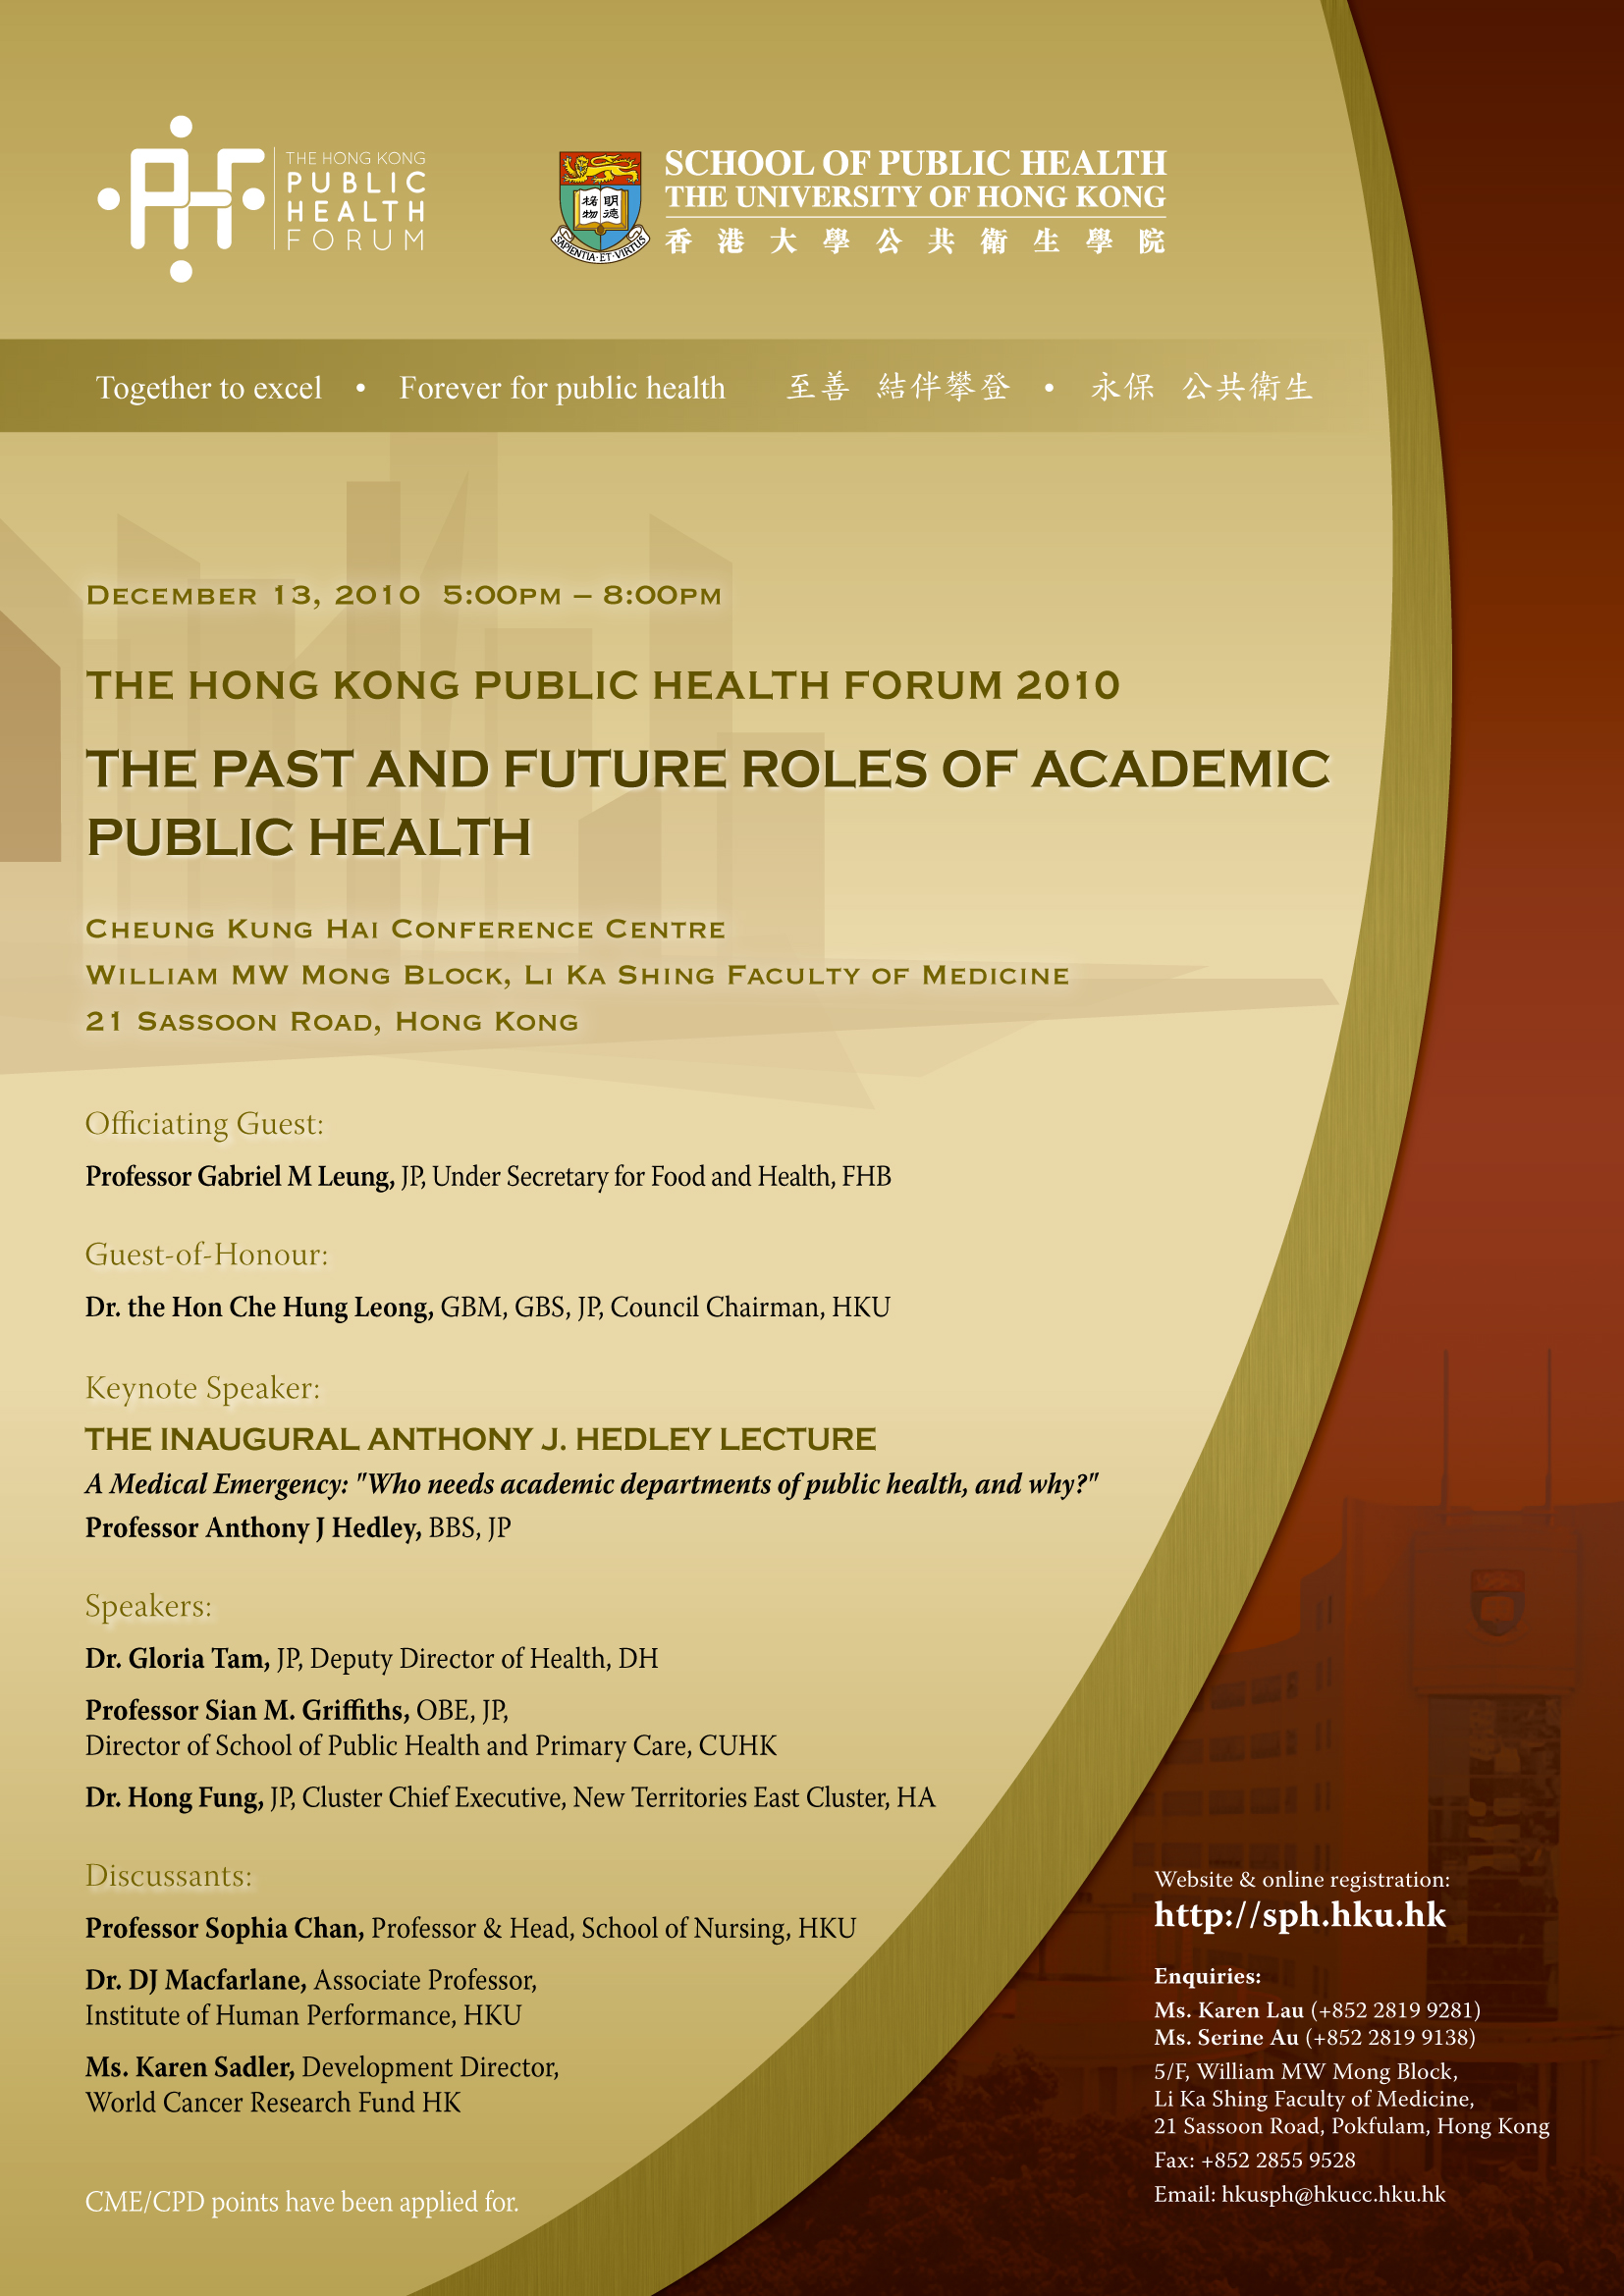 The Hong Kong Public Health Forum 2010